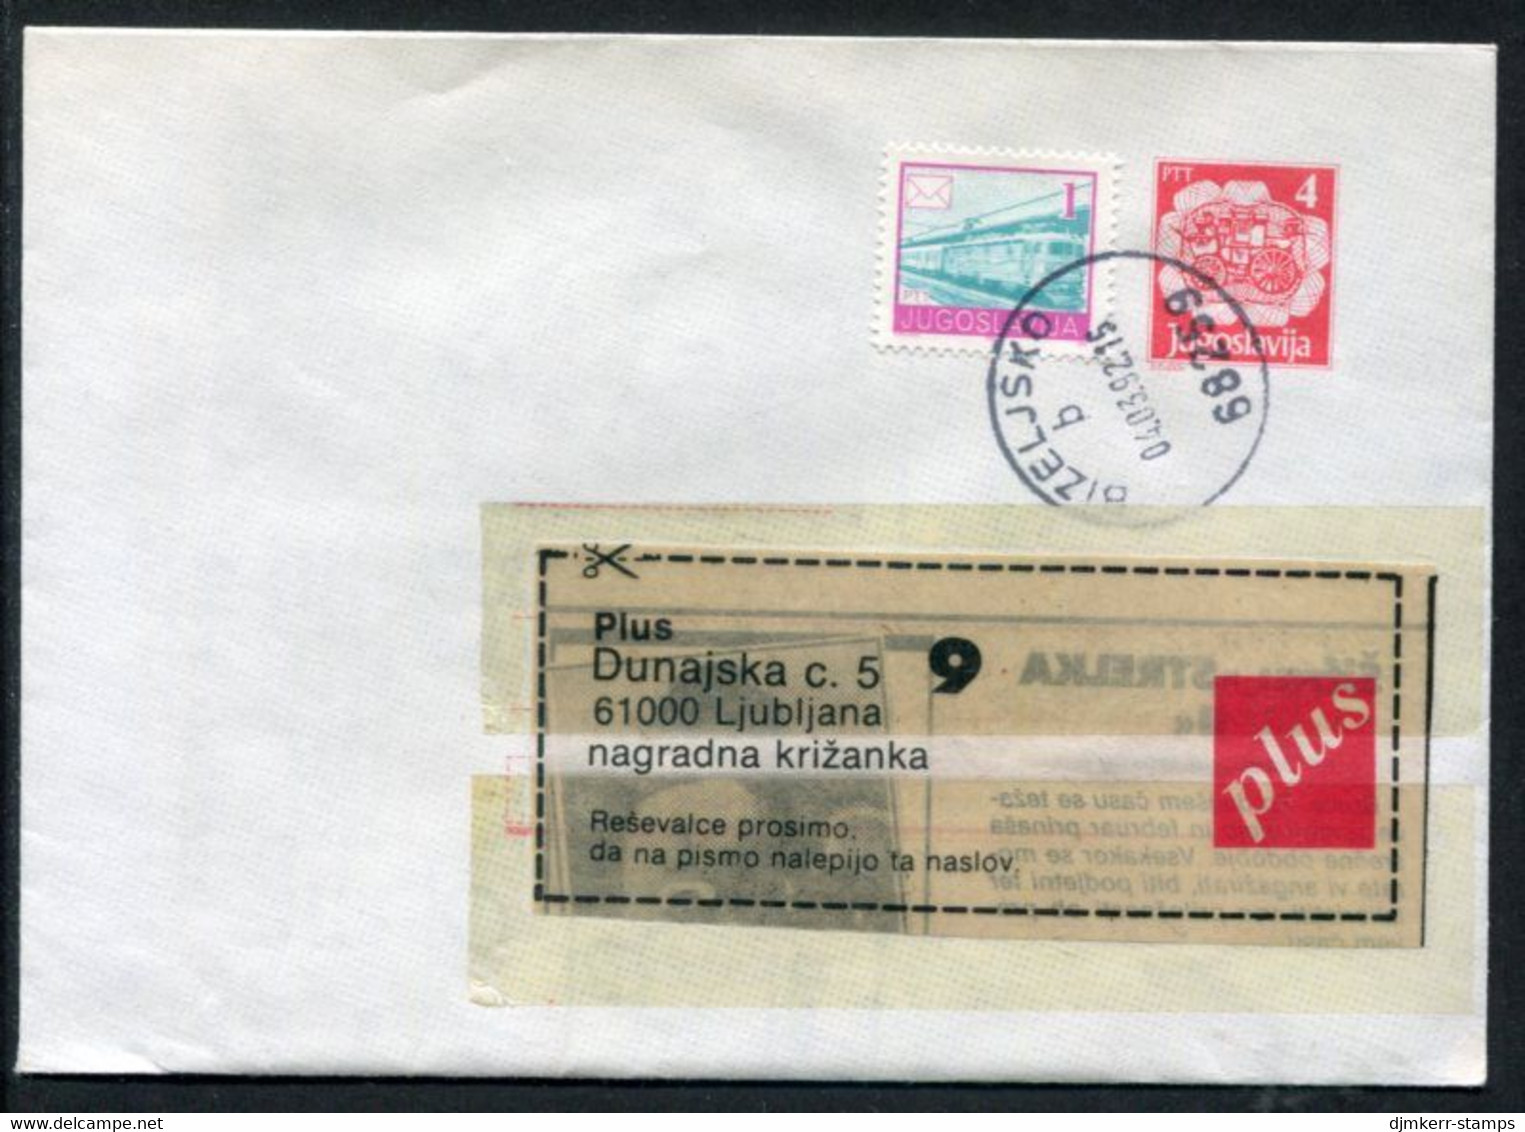 YUGOSLAVIA 1991 Mailcoach 4 D. Stationery Envelope Used With Additional Franking.  Michel U98 - Postal Stationery